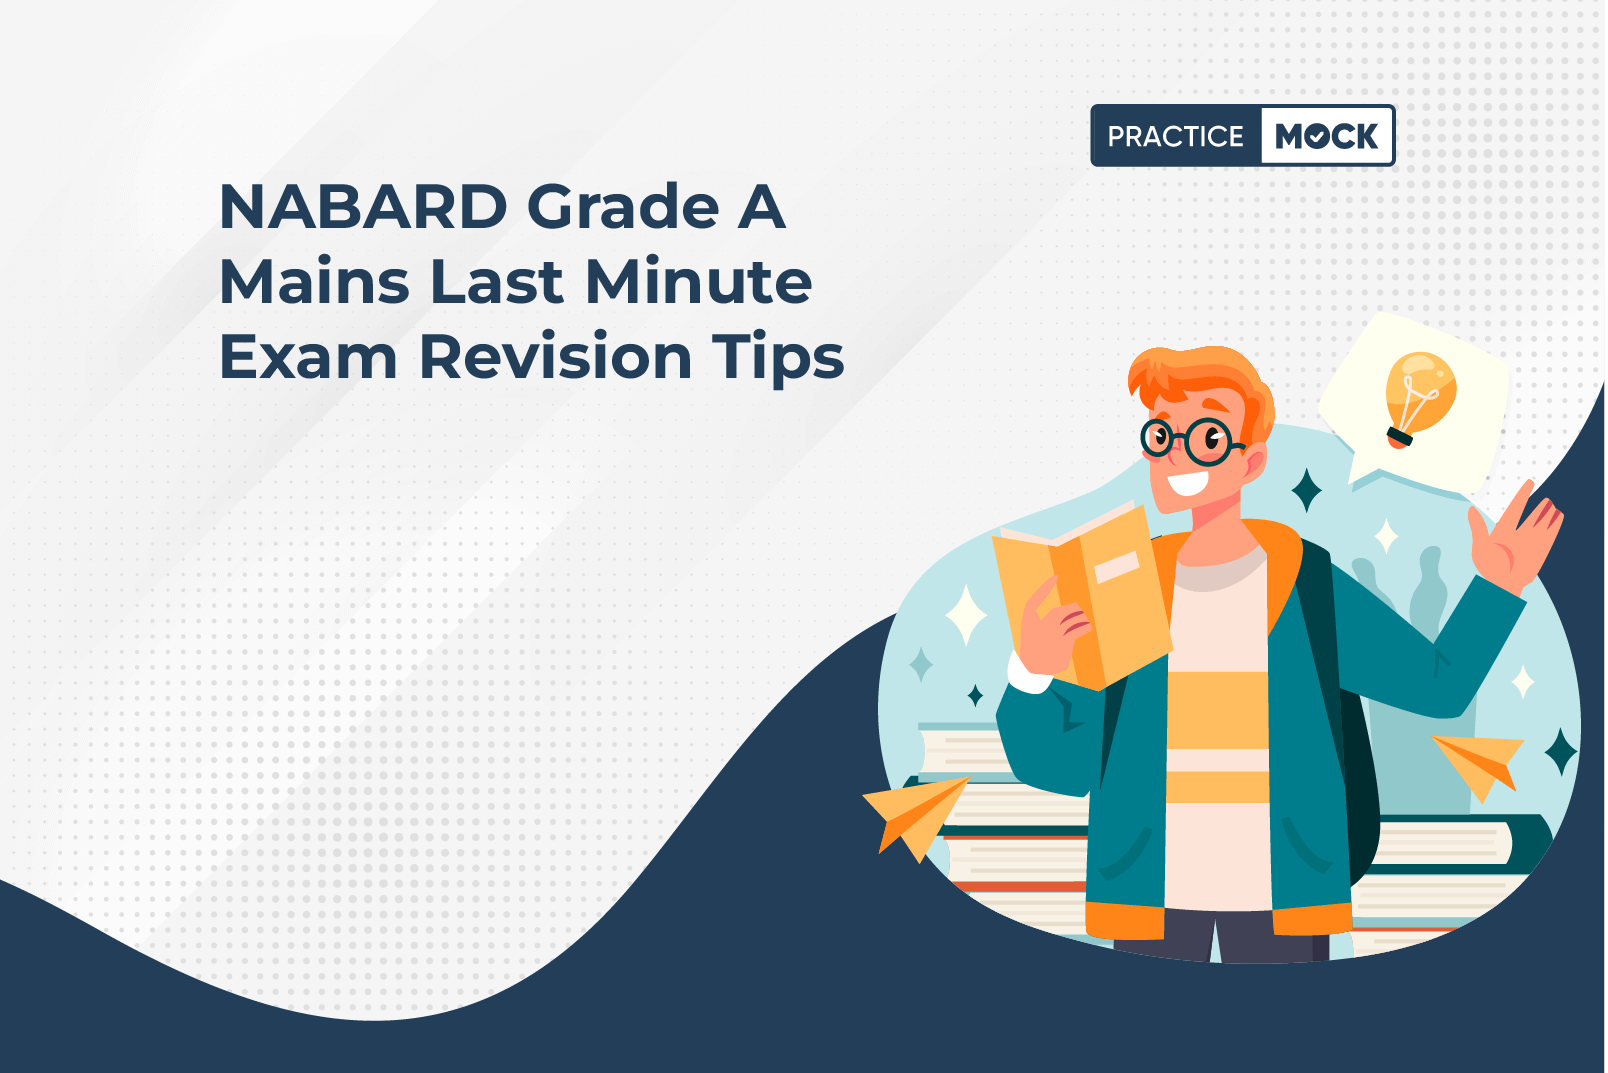 NABARD Grade A Mains Last Minute Exam Revision Tips